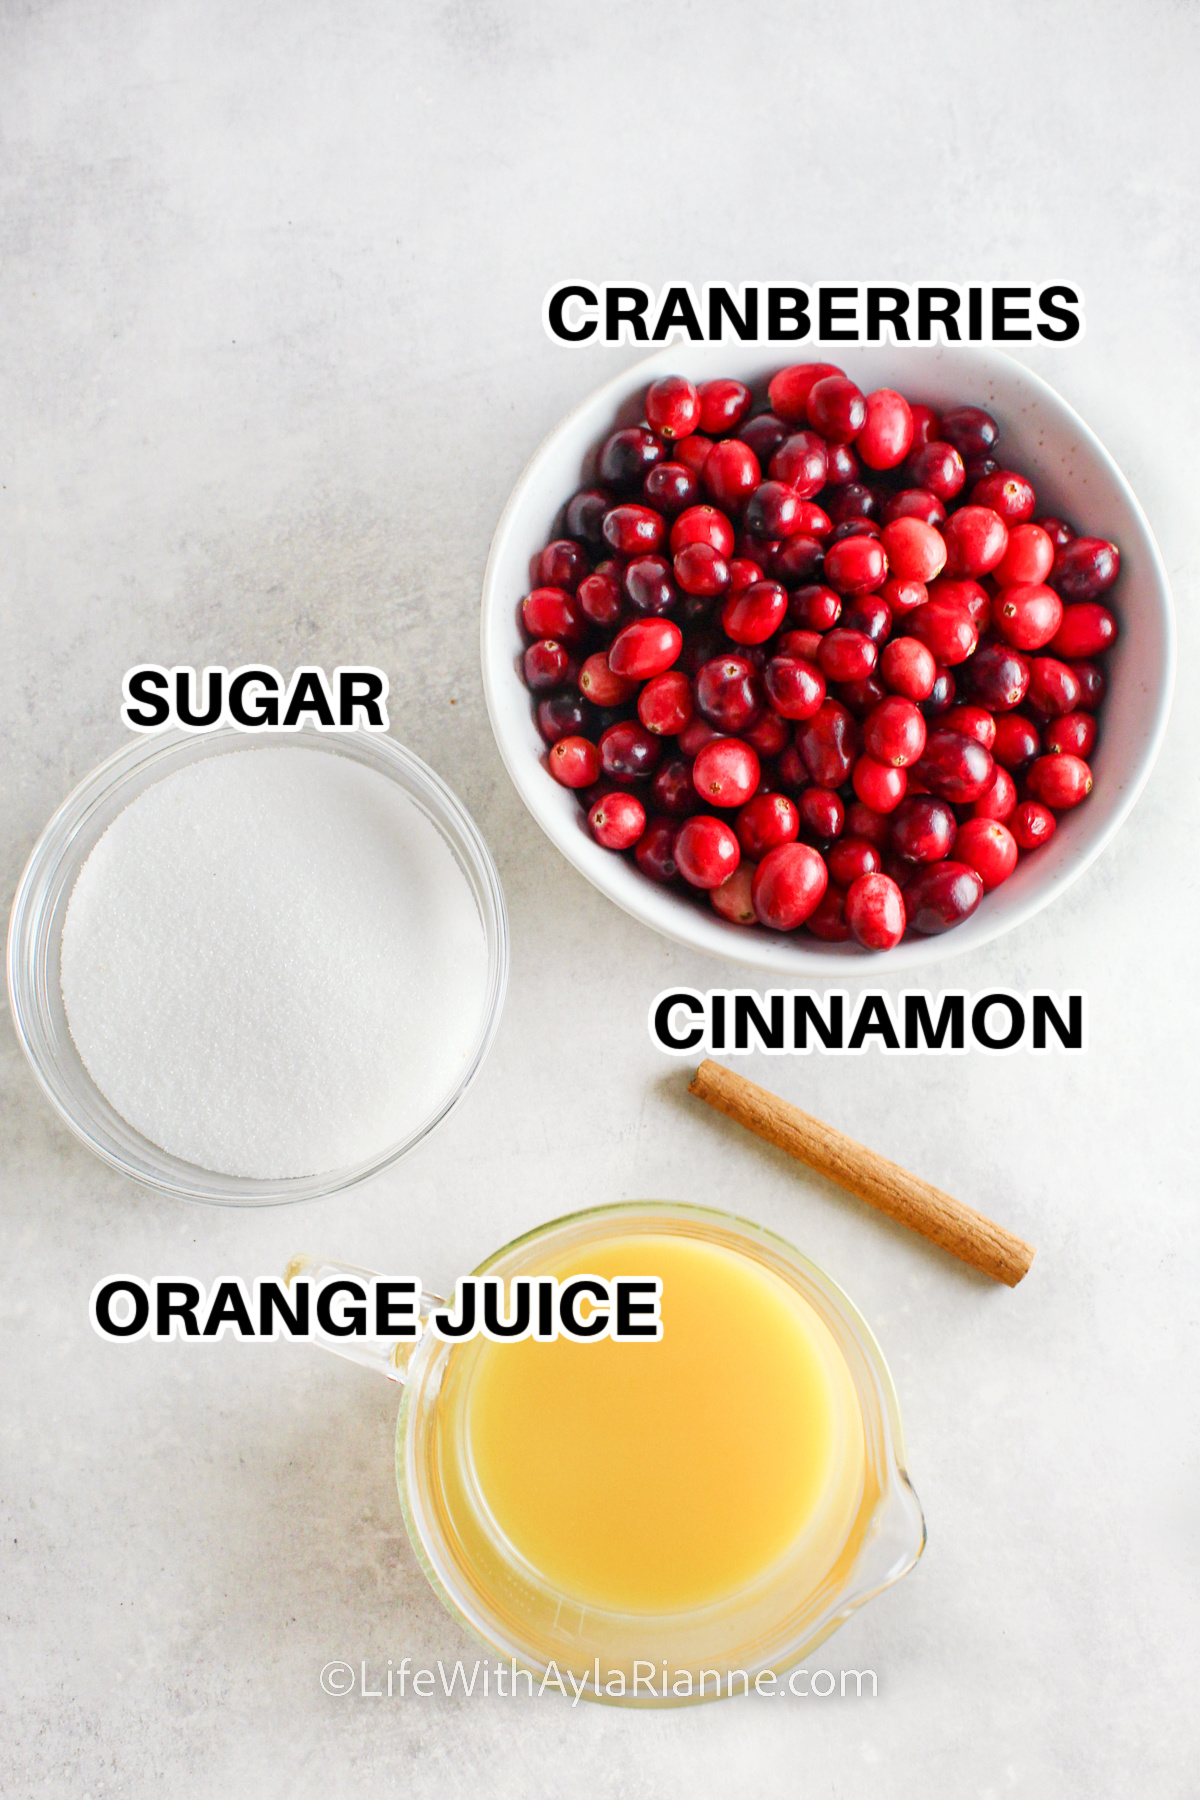 ingredients for cranberry sauce with orange juice including cranberries, sugar, orange juice, and cinnamon